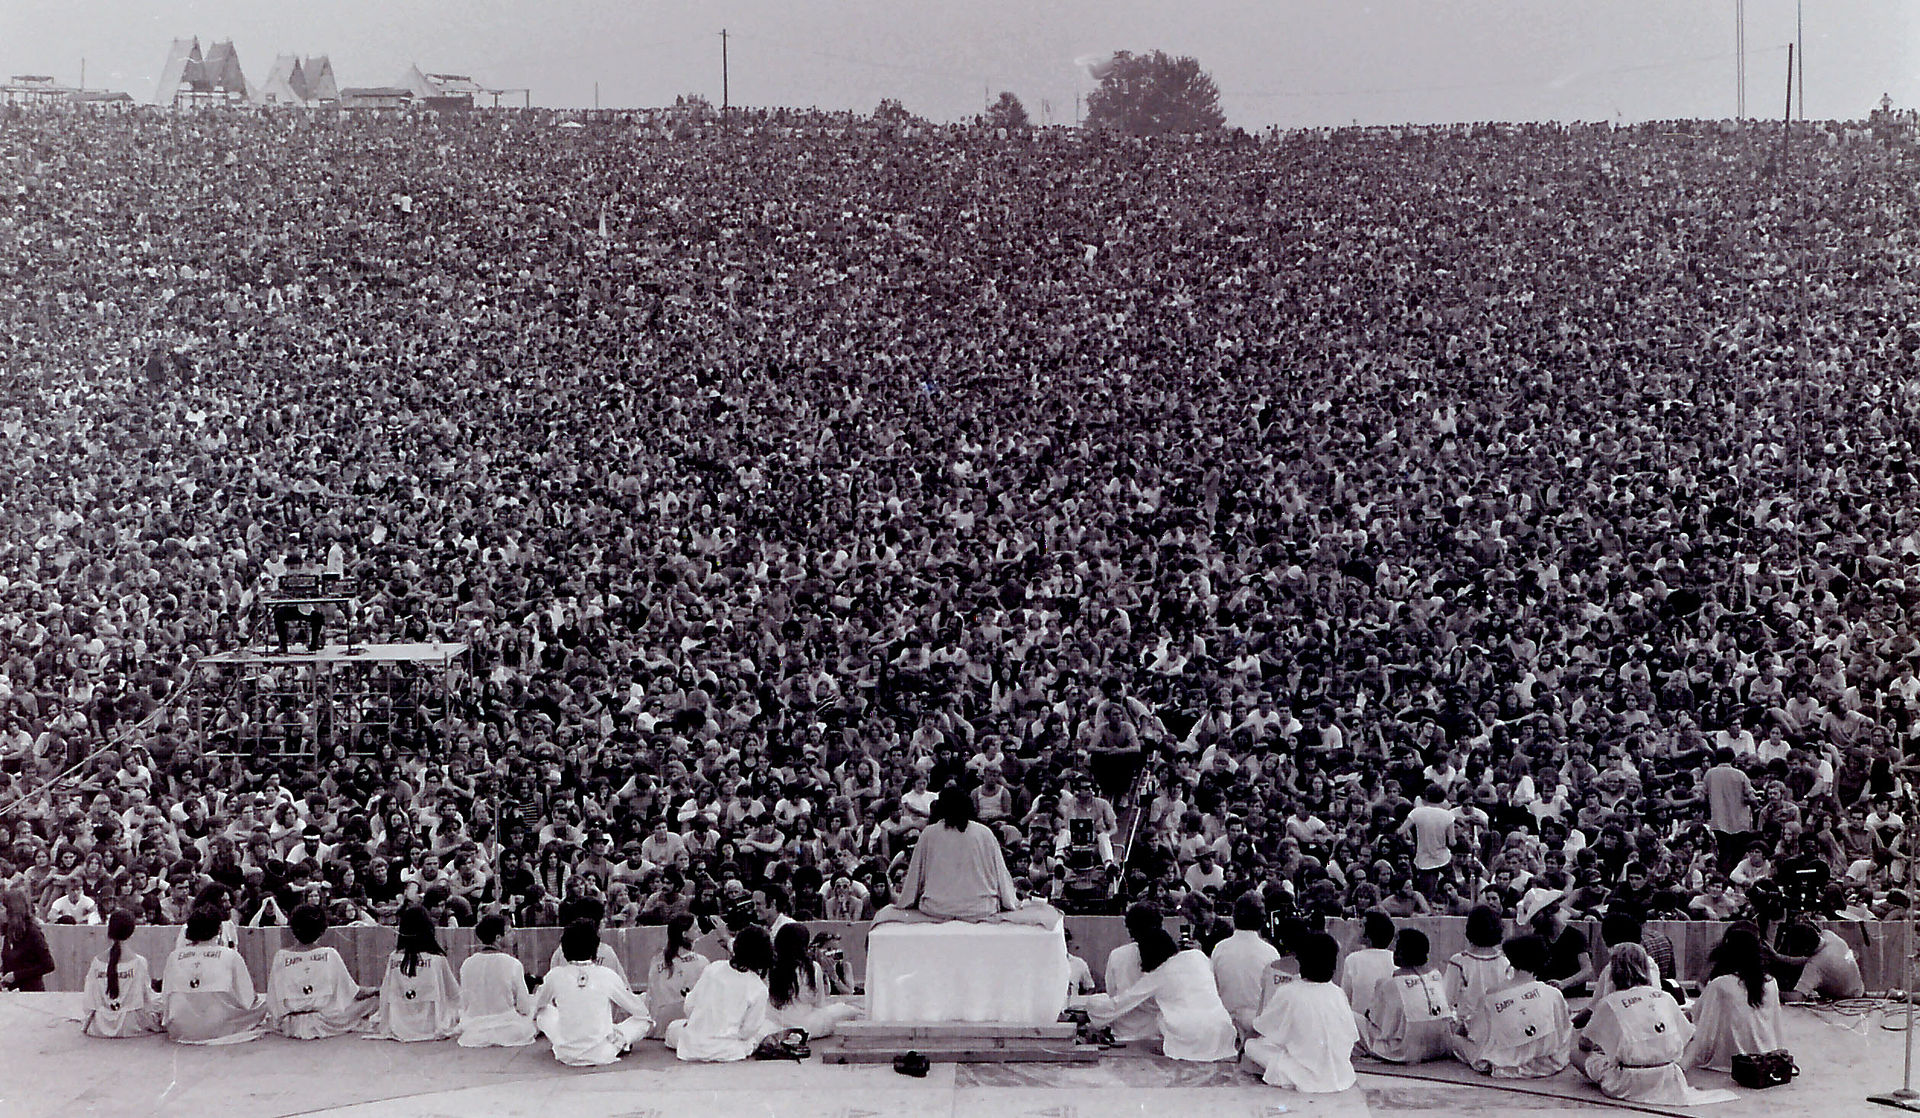 Sri Swami Satchidananda opens the Woodstock Music and Art Fair